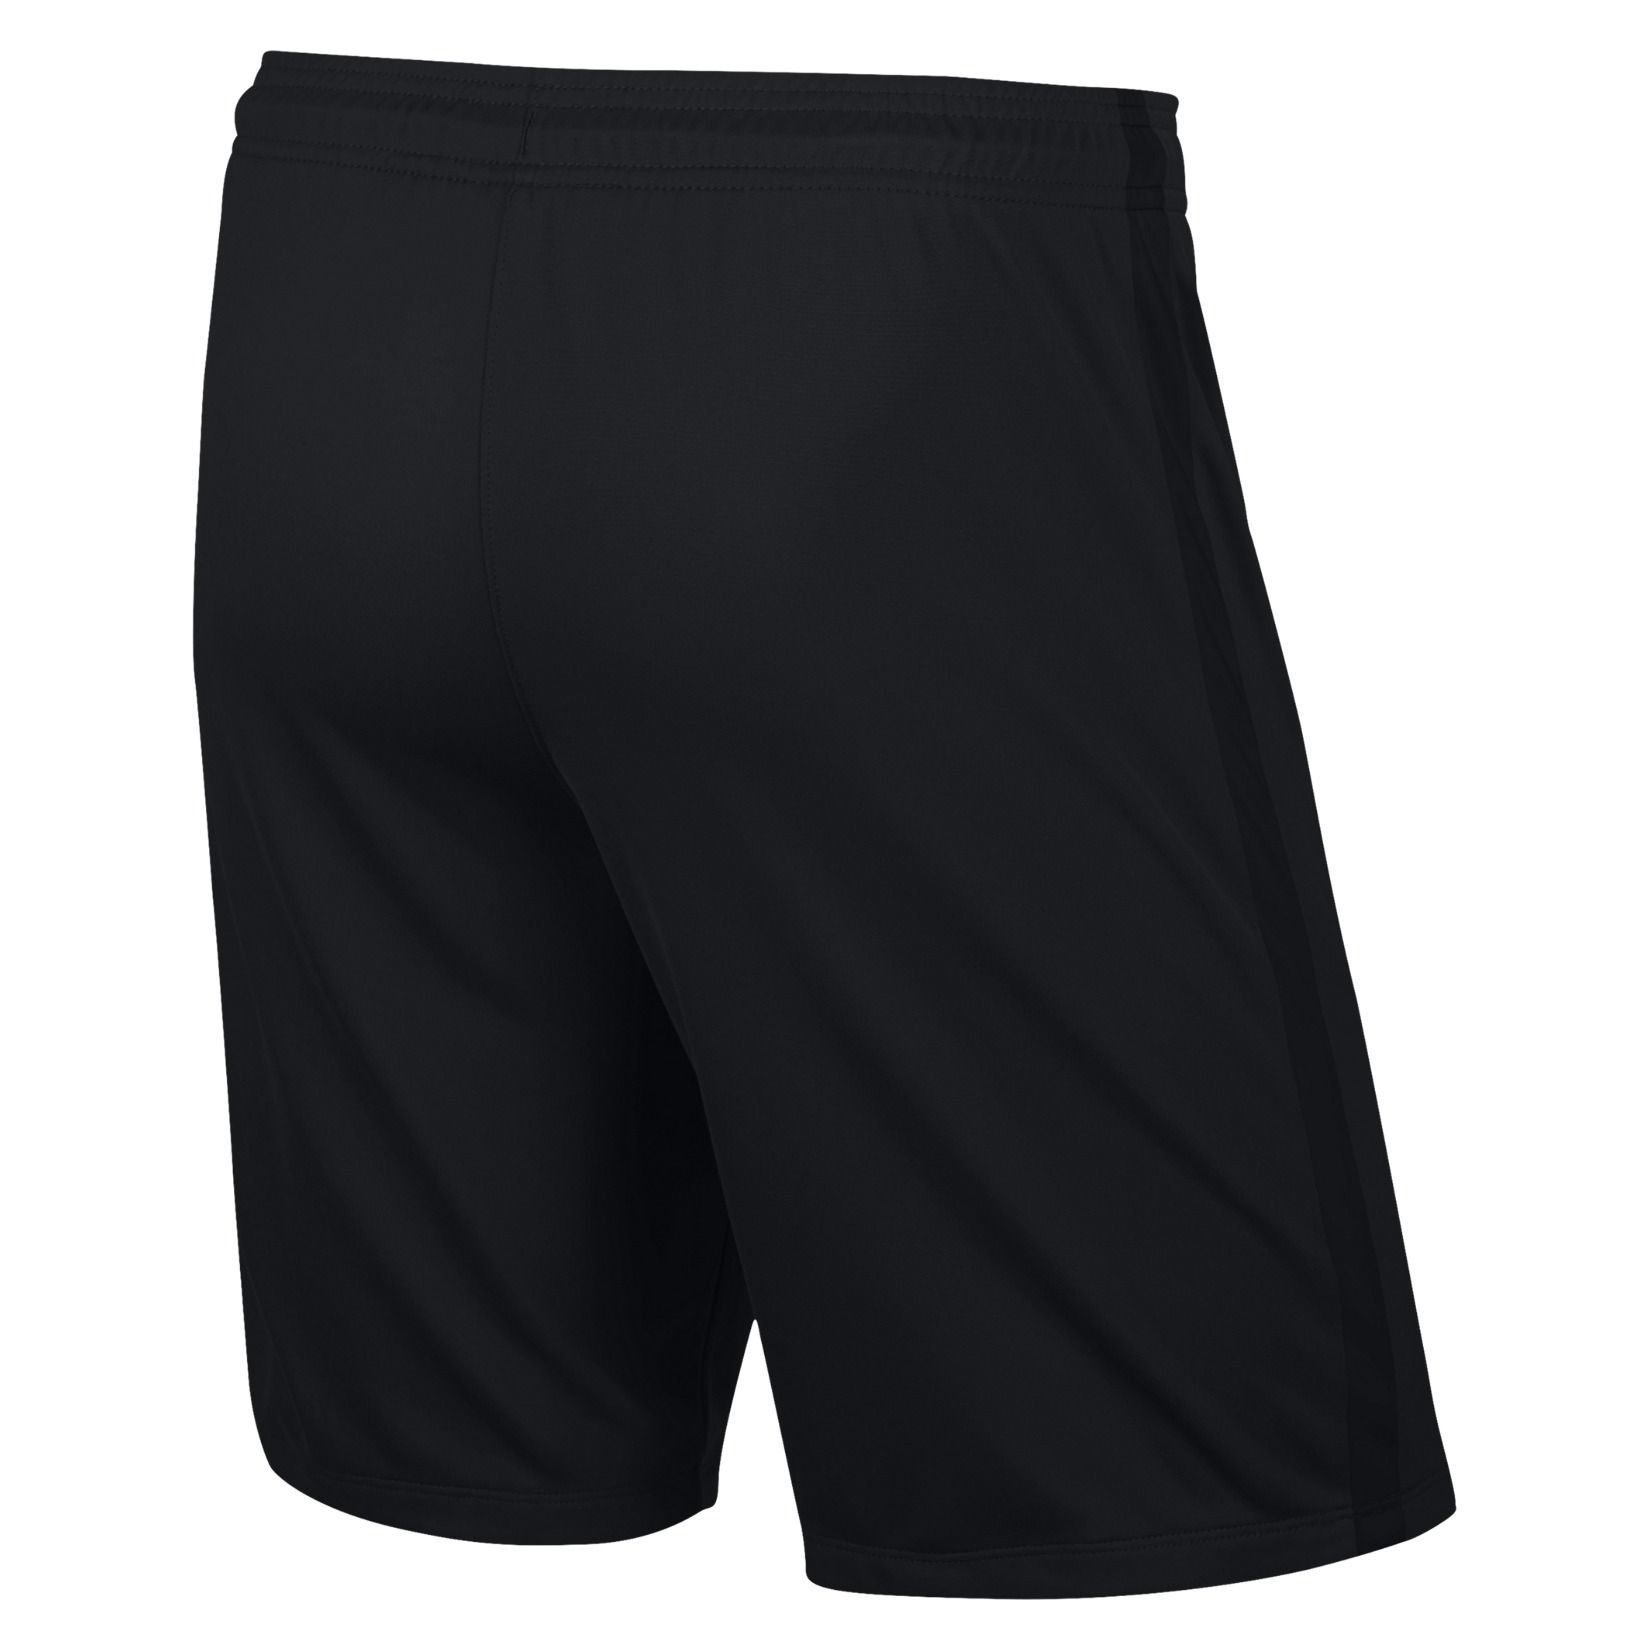 Nike League Knit Short (Goalkeeper) - Kitlocker.com